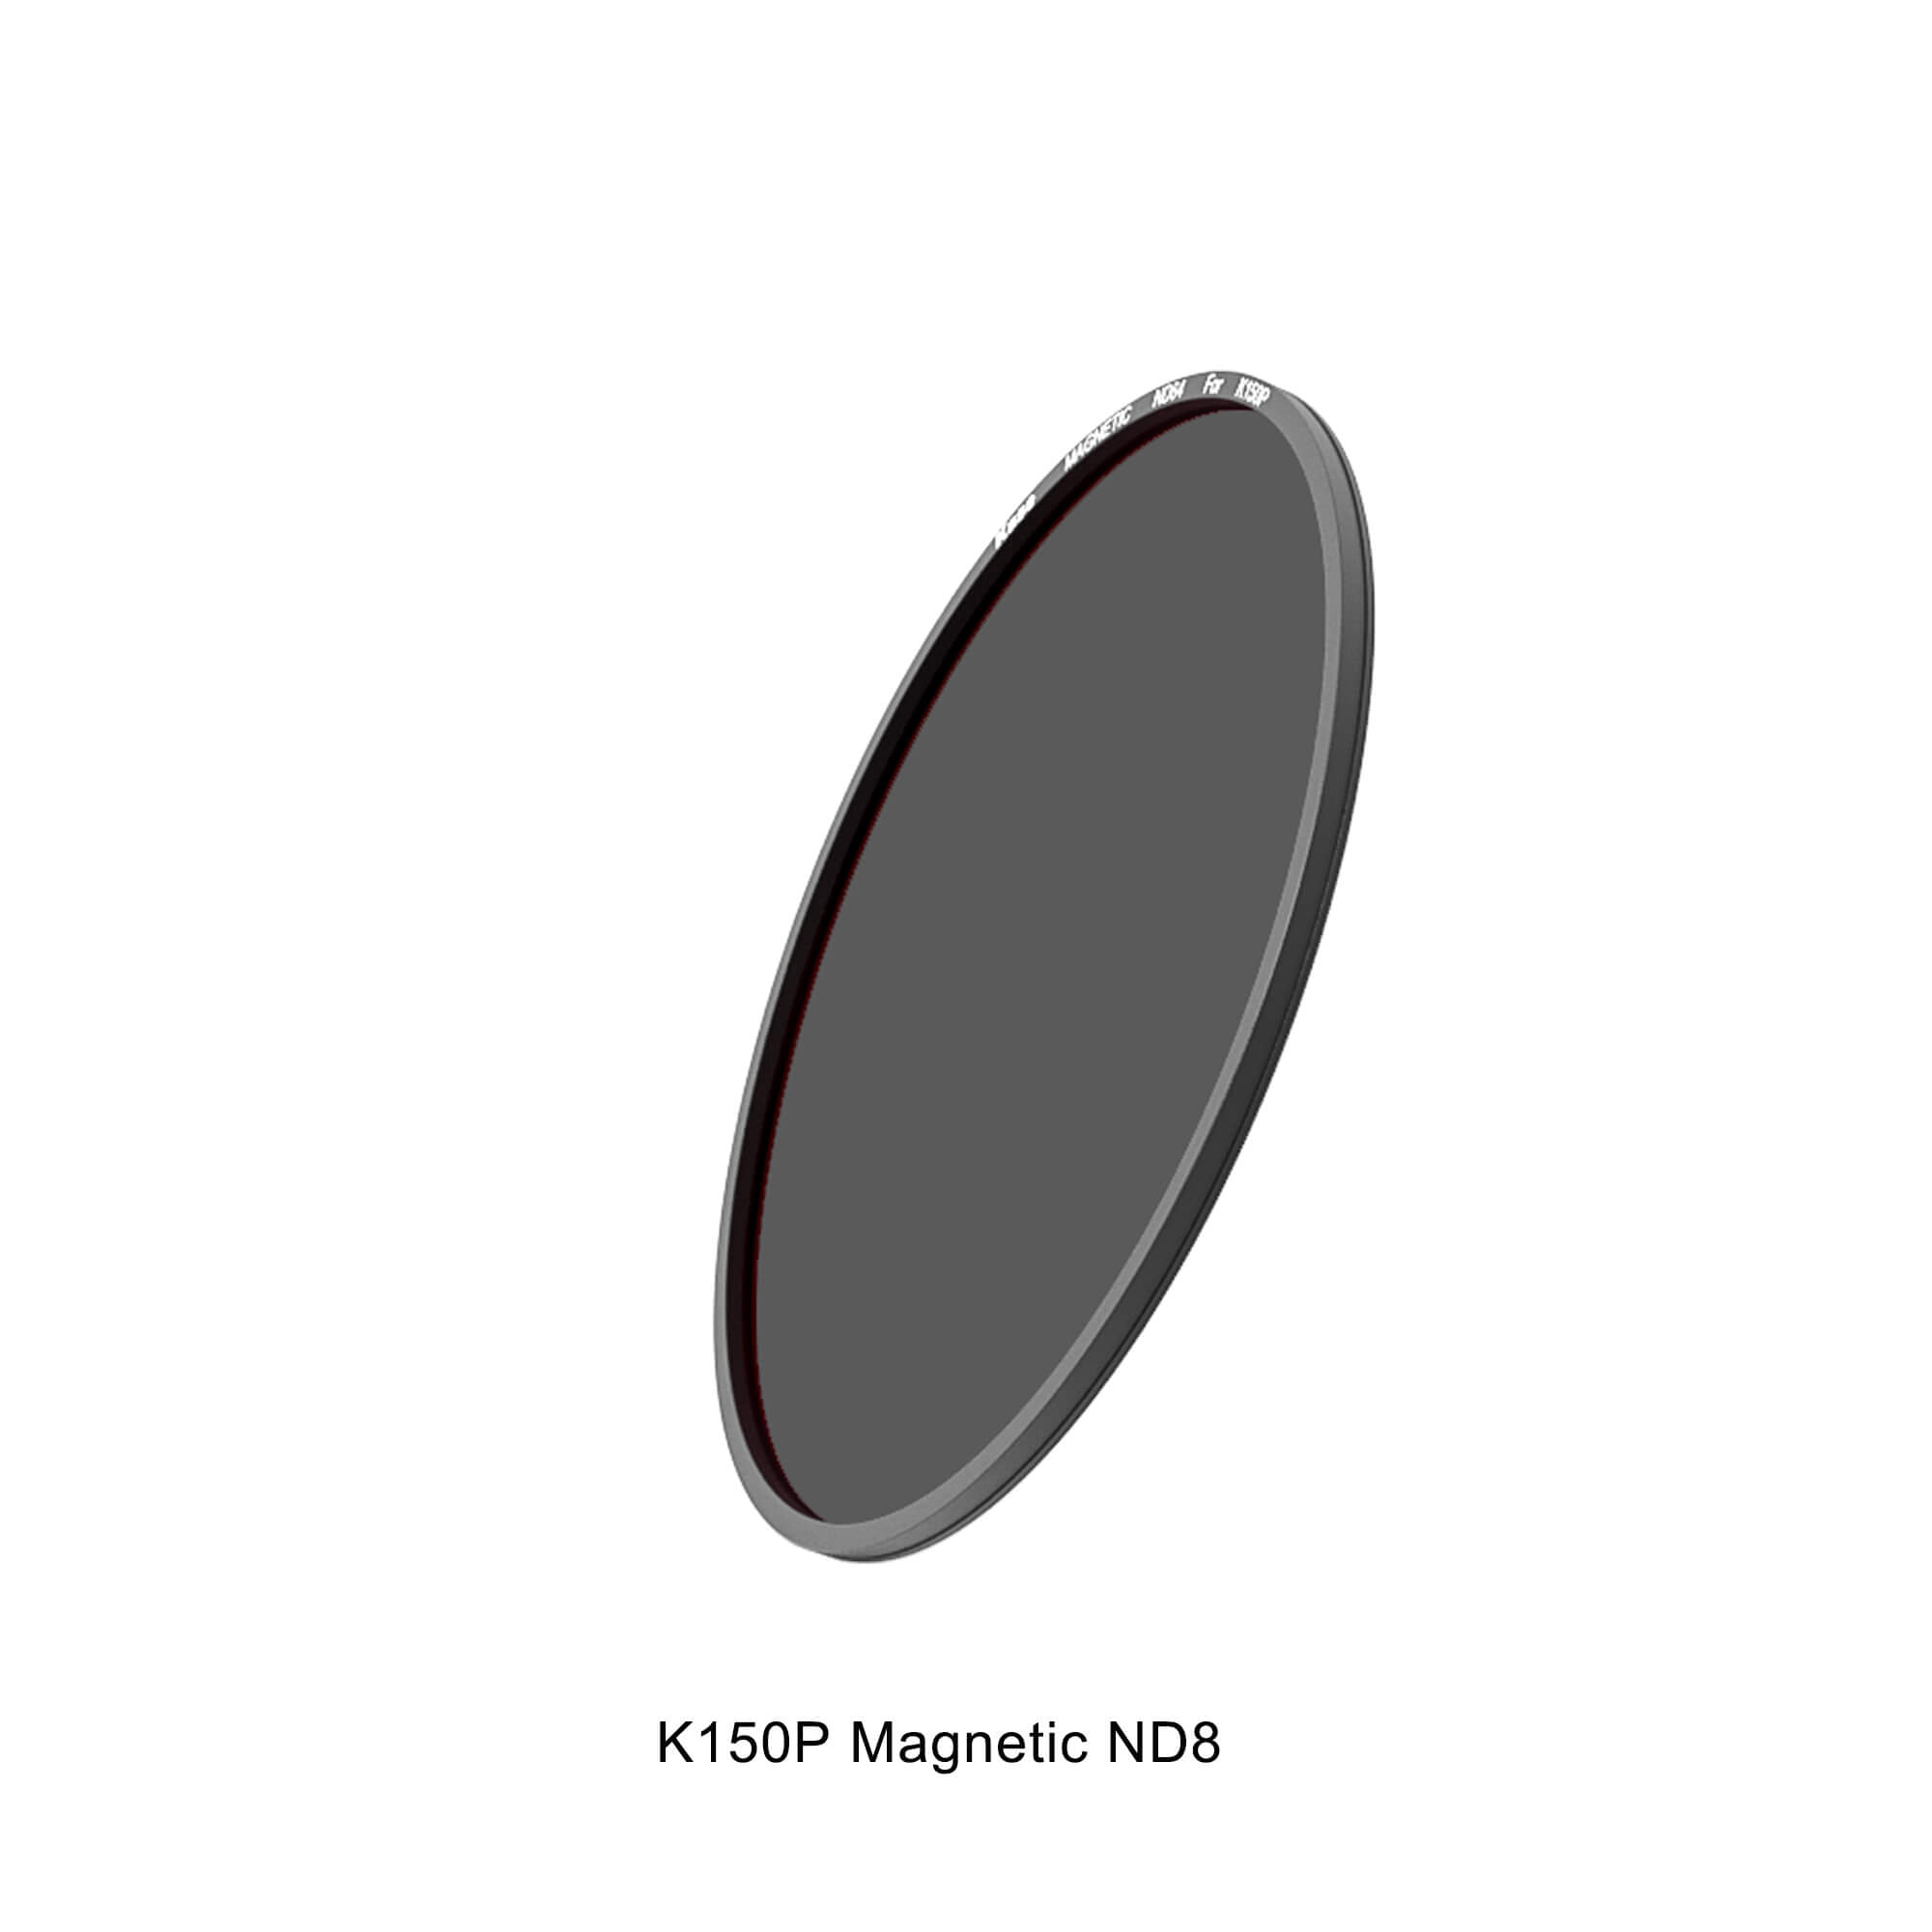 K150P Magnetischer ND8 Filter 3 Stops